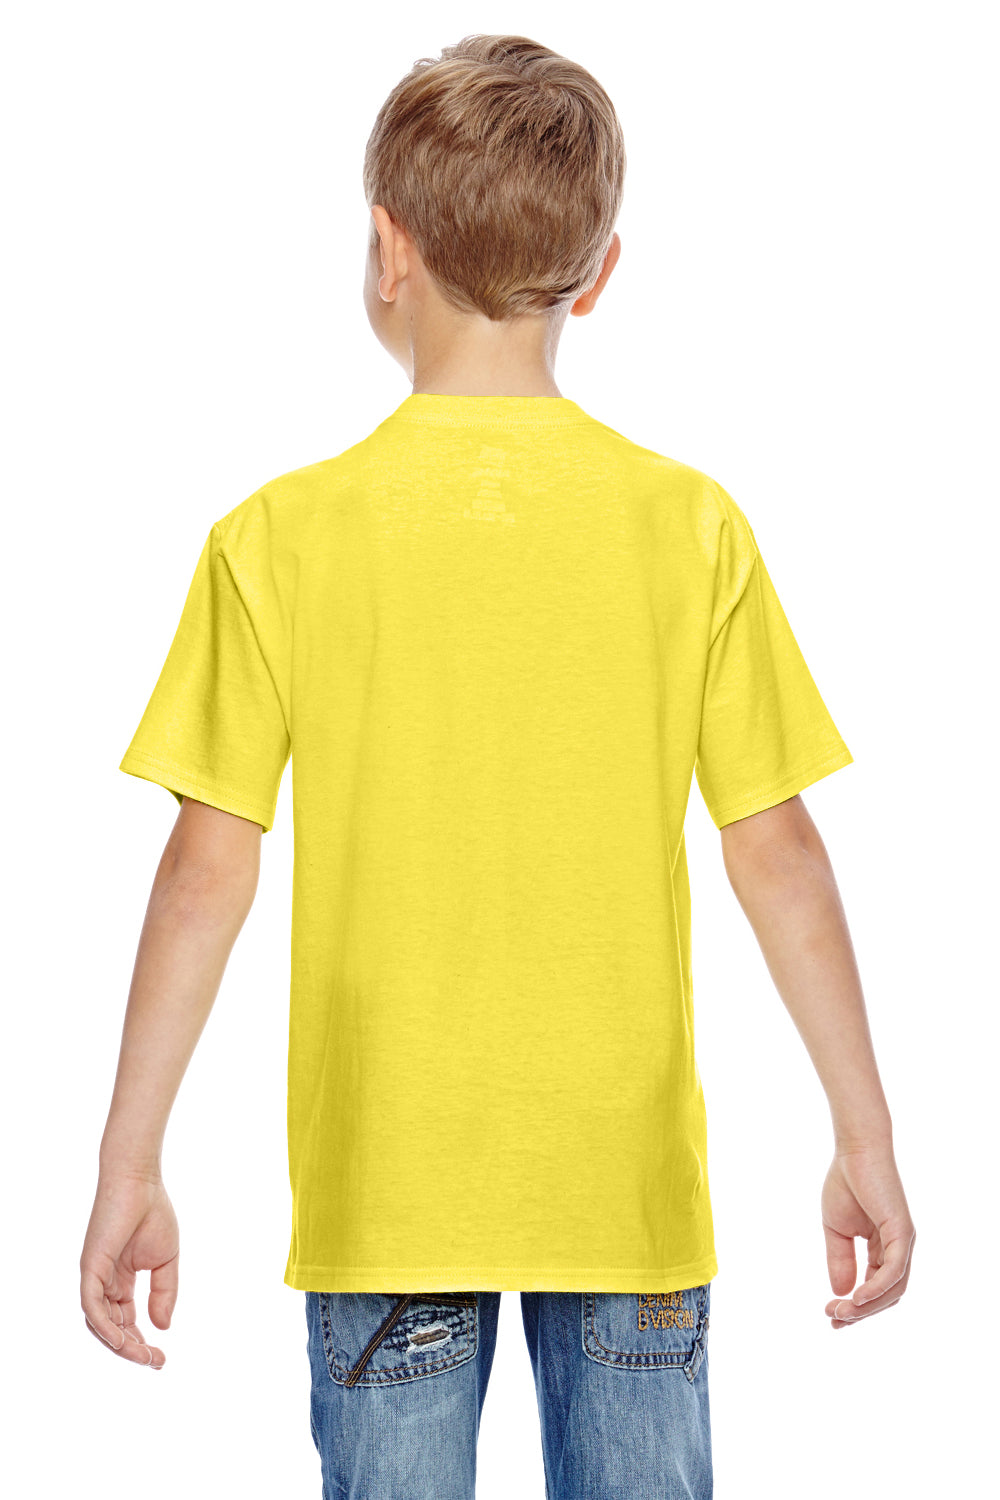 Hanes 498Y Youth Nano-T Short Sleeve Crewneck T-Shirt Yellow Back